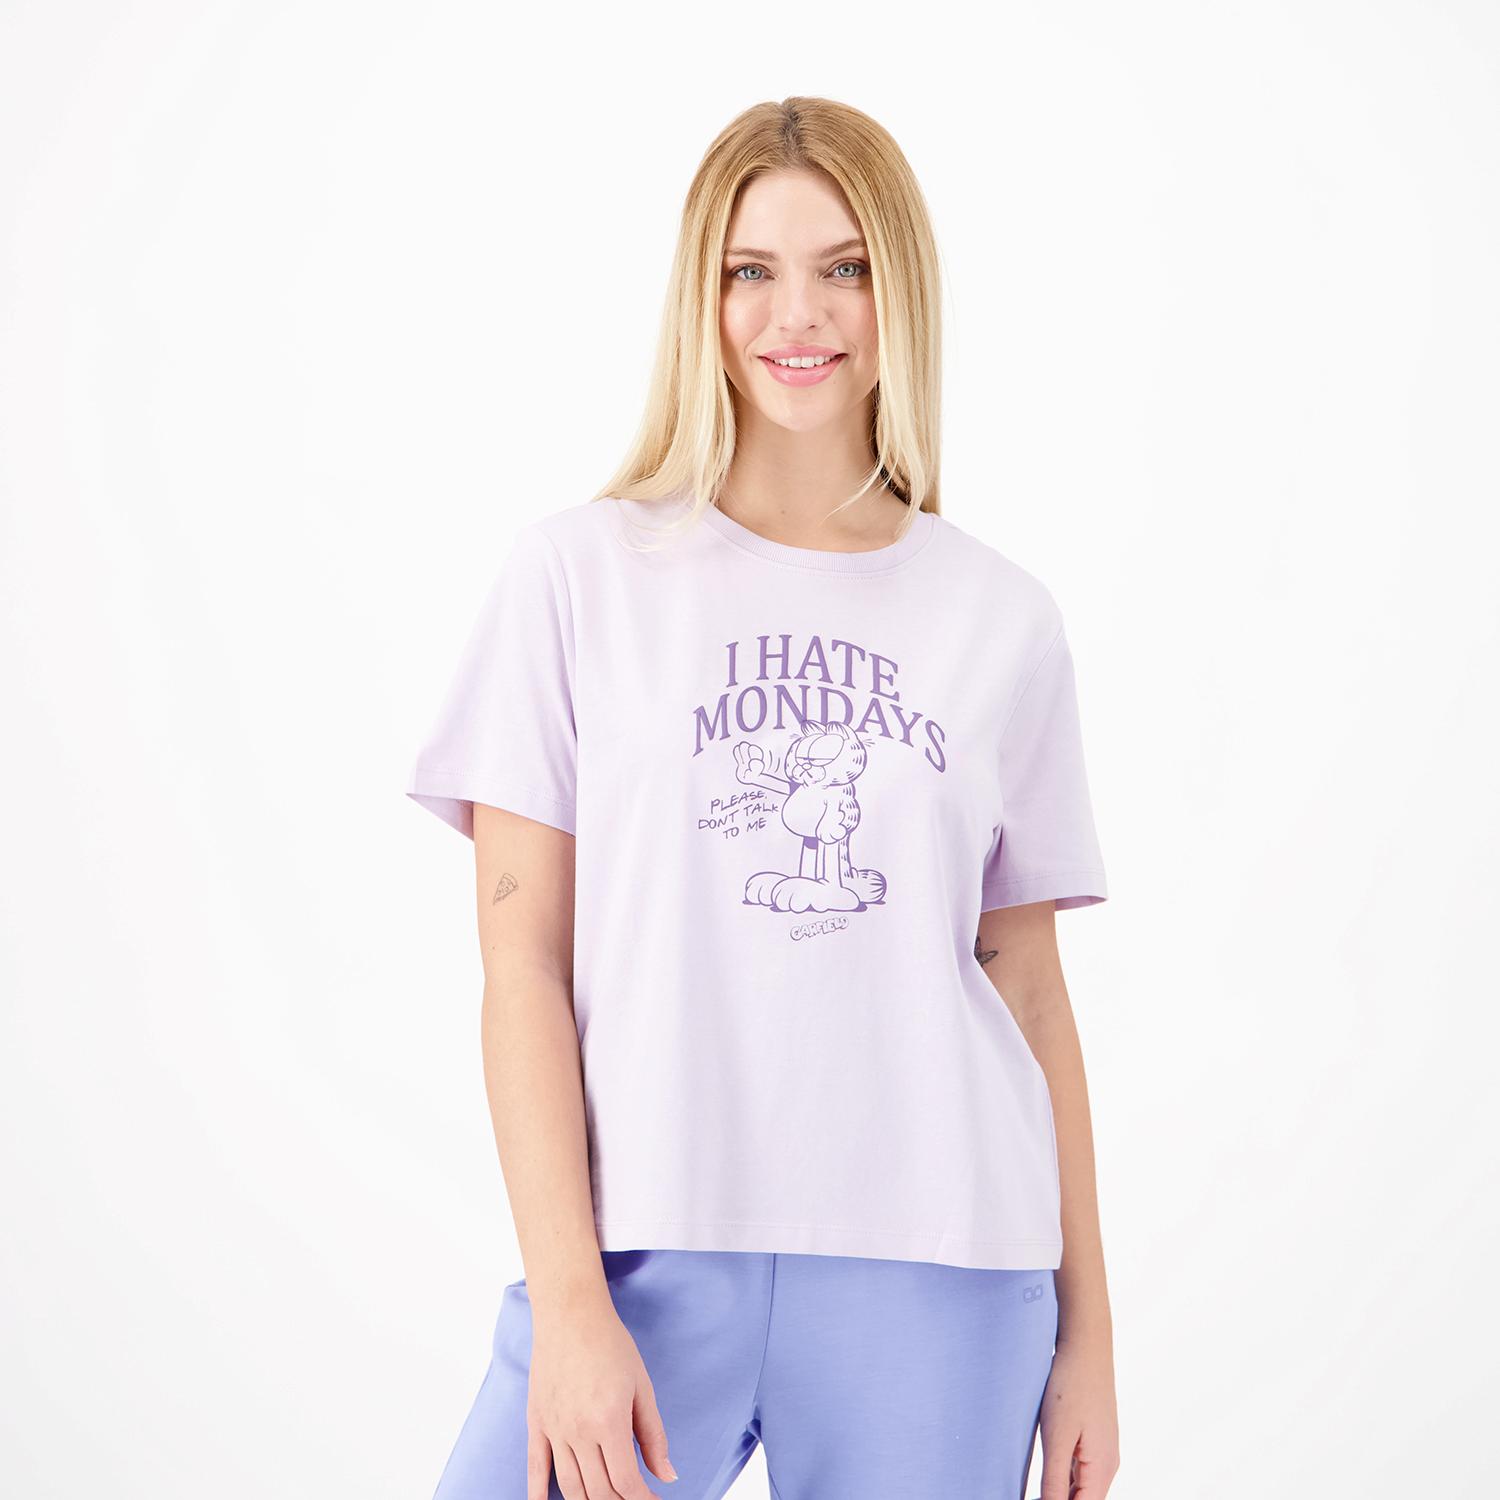 Camiseta mujer 100% algodon colores